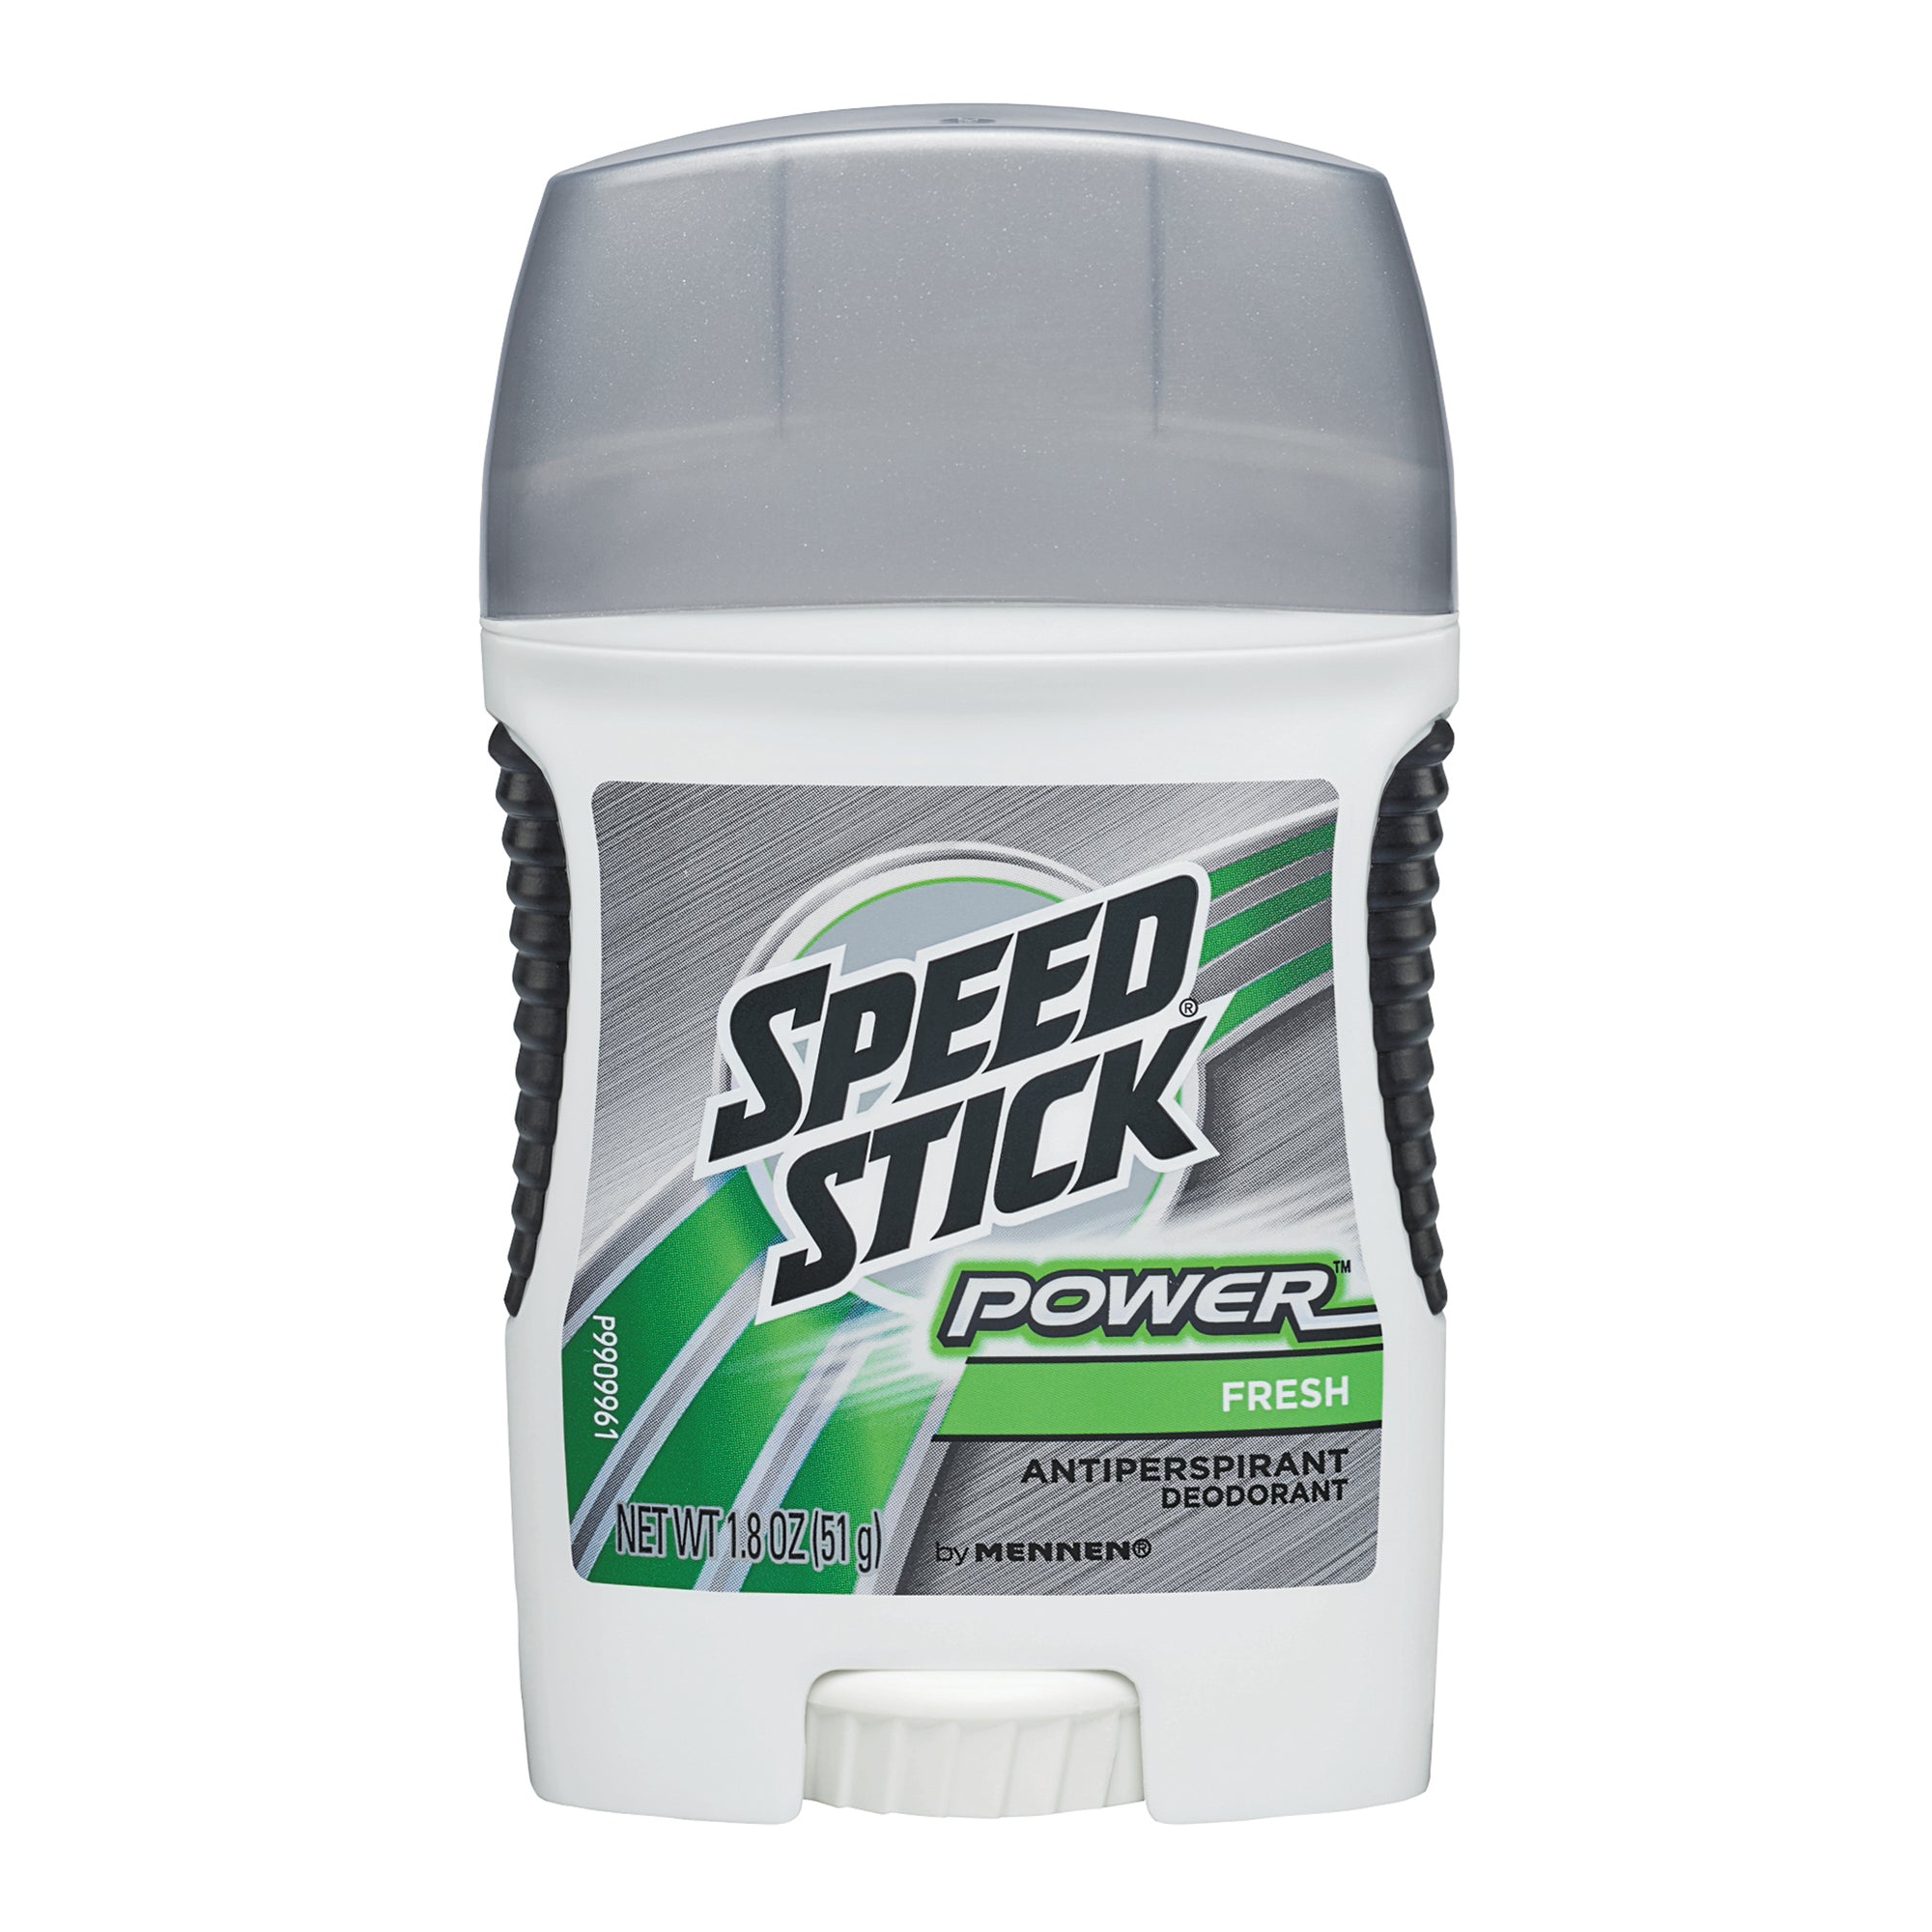 Antiperspirant / Deodorant Power Speed Stick Solid 1.8 oz. Fresh Scent